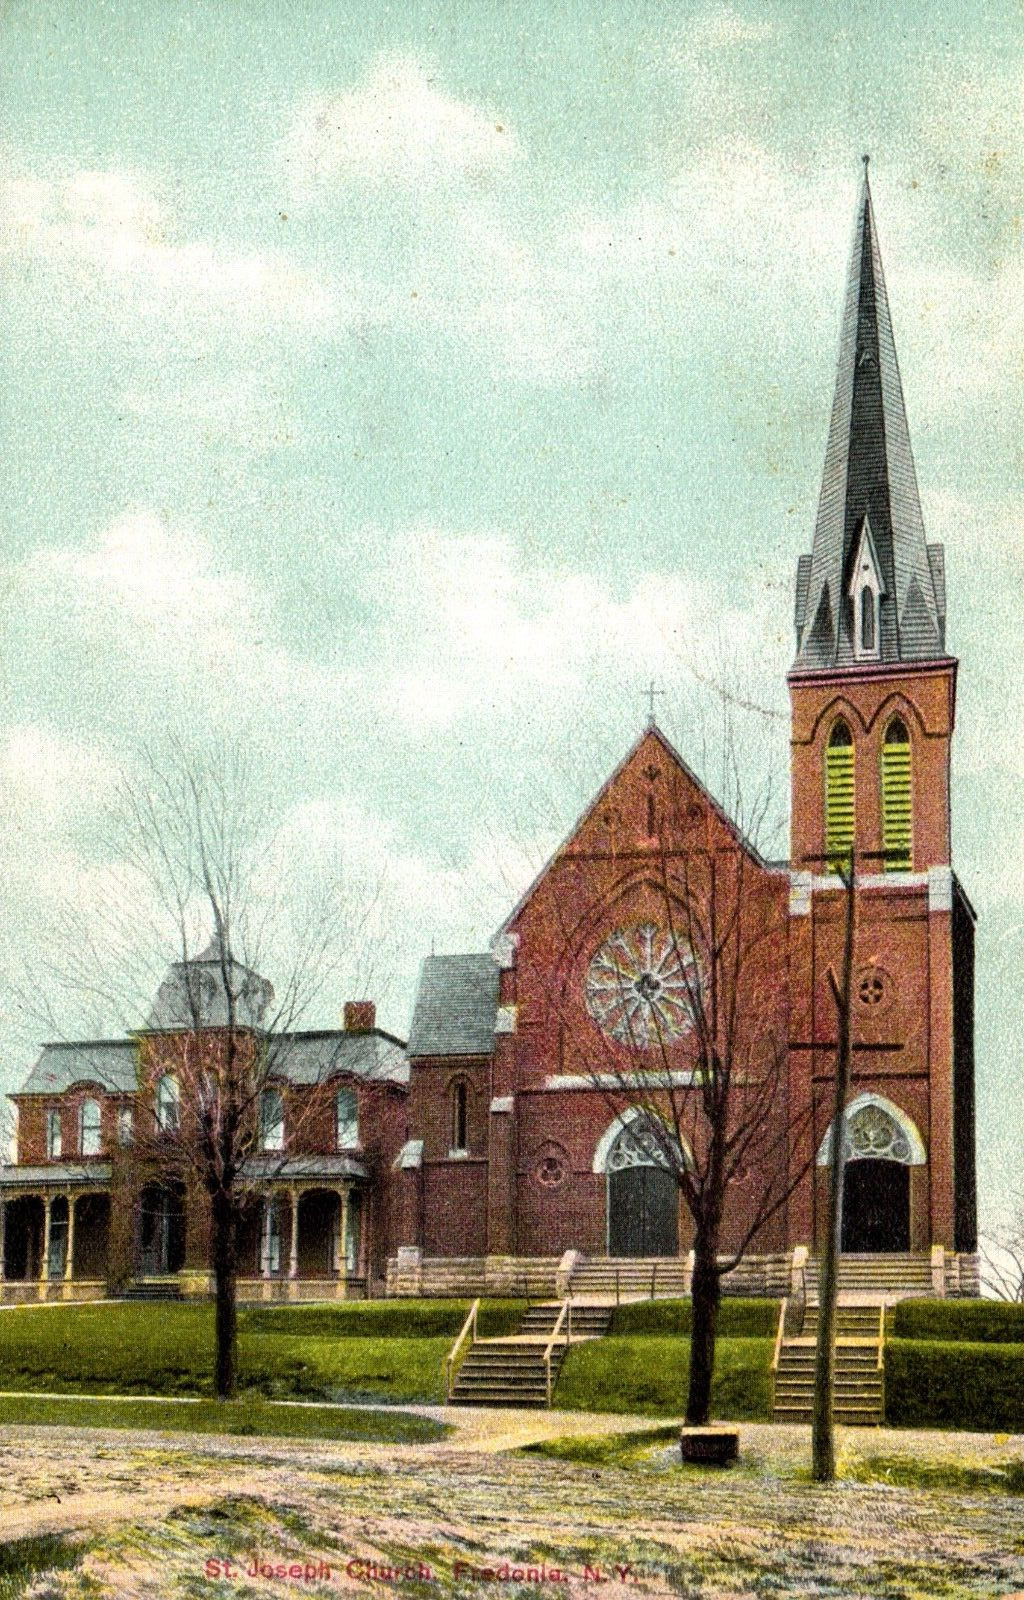 Postcard Saint Joseph church Fredonia New York